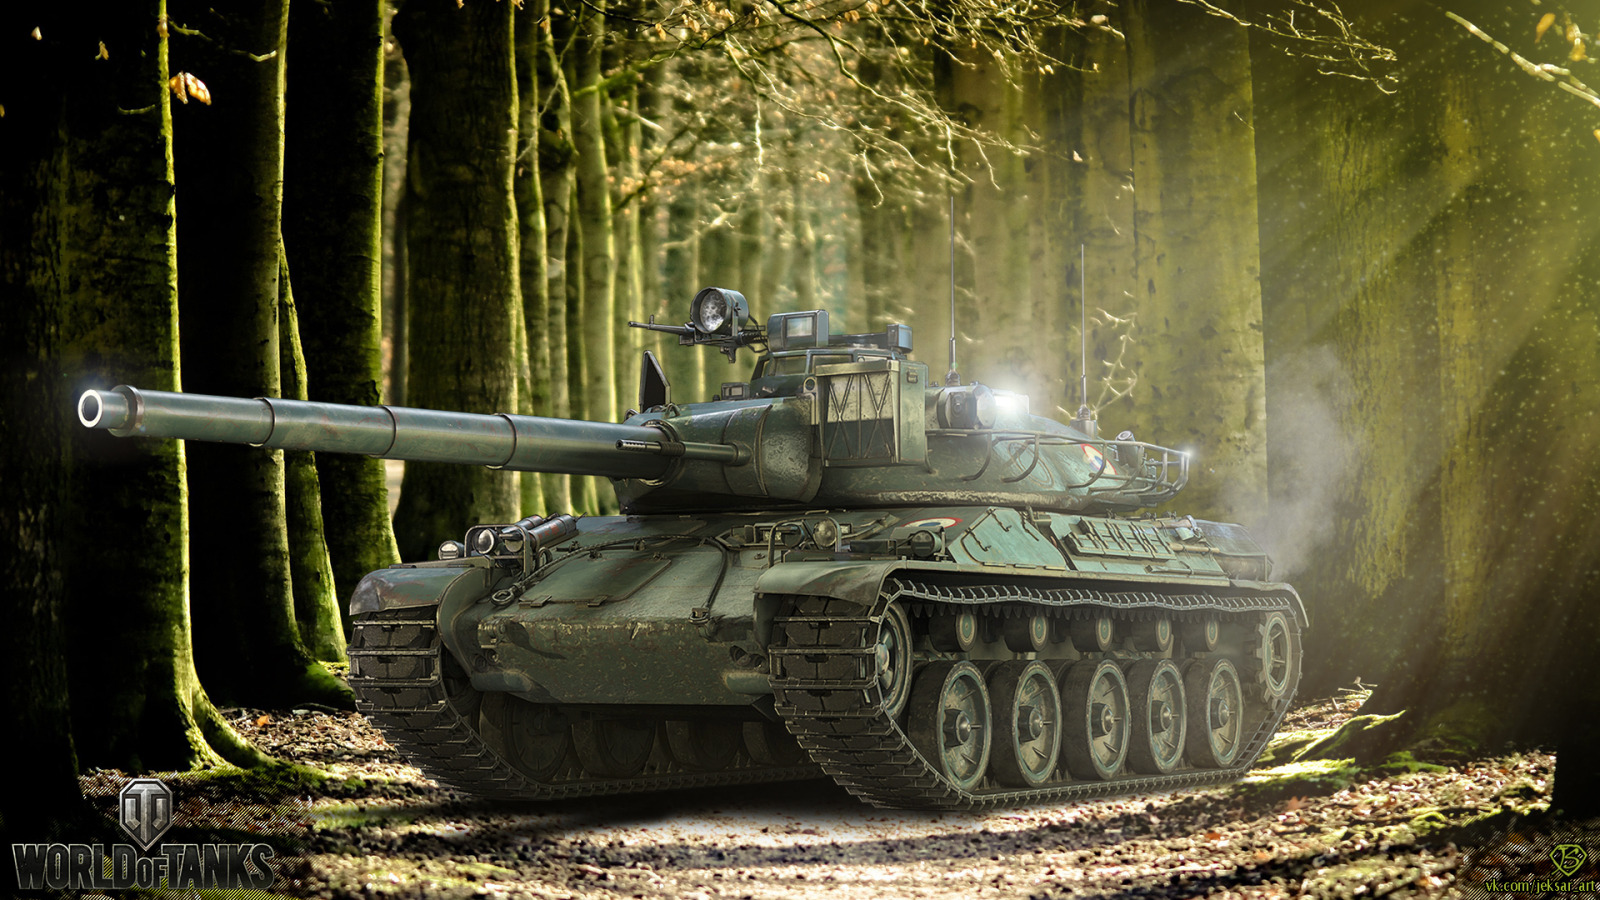 Про танк ис. Танк World of Tanks. АМХ-30 танк. AMX 30b. АМХ-30 танк ворлд оф танк.